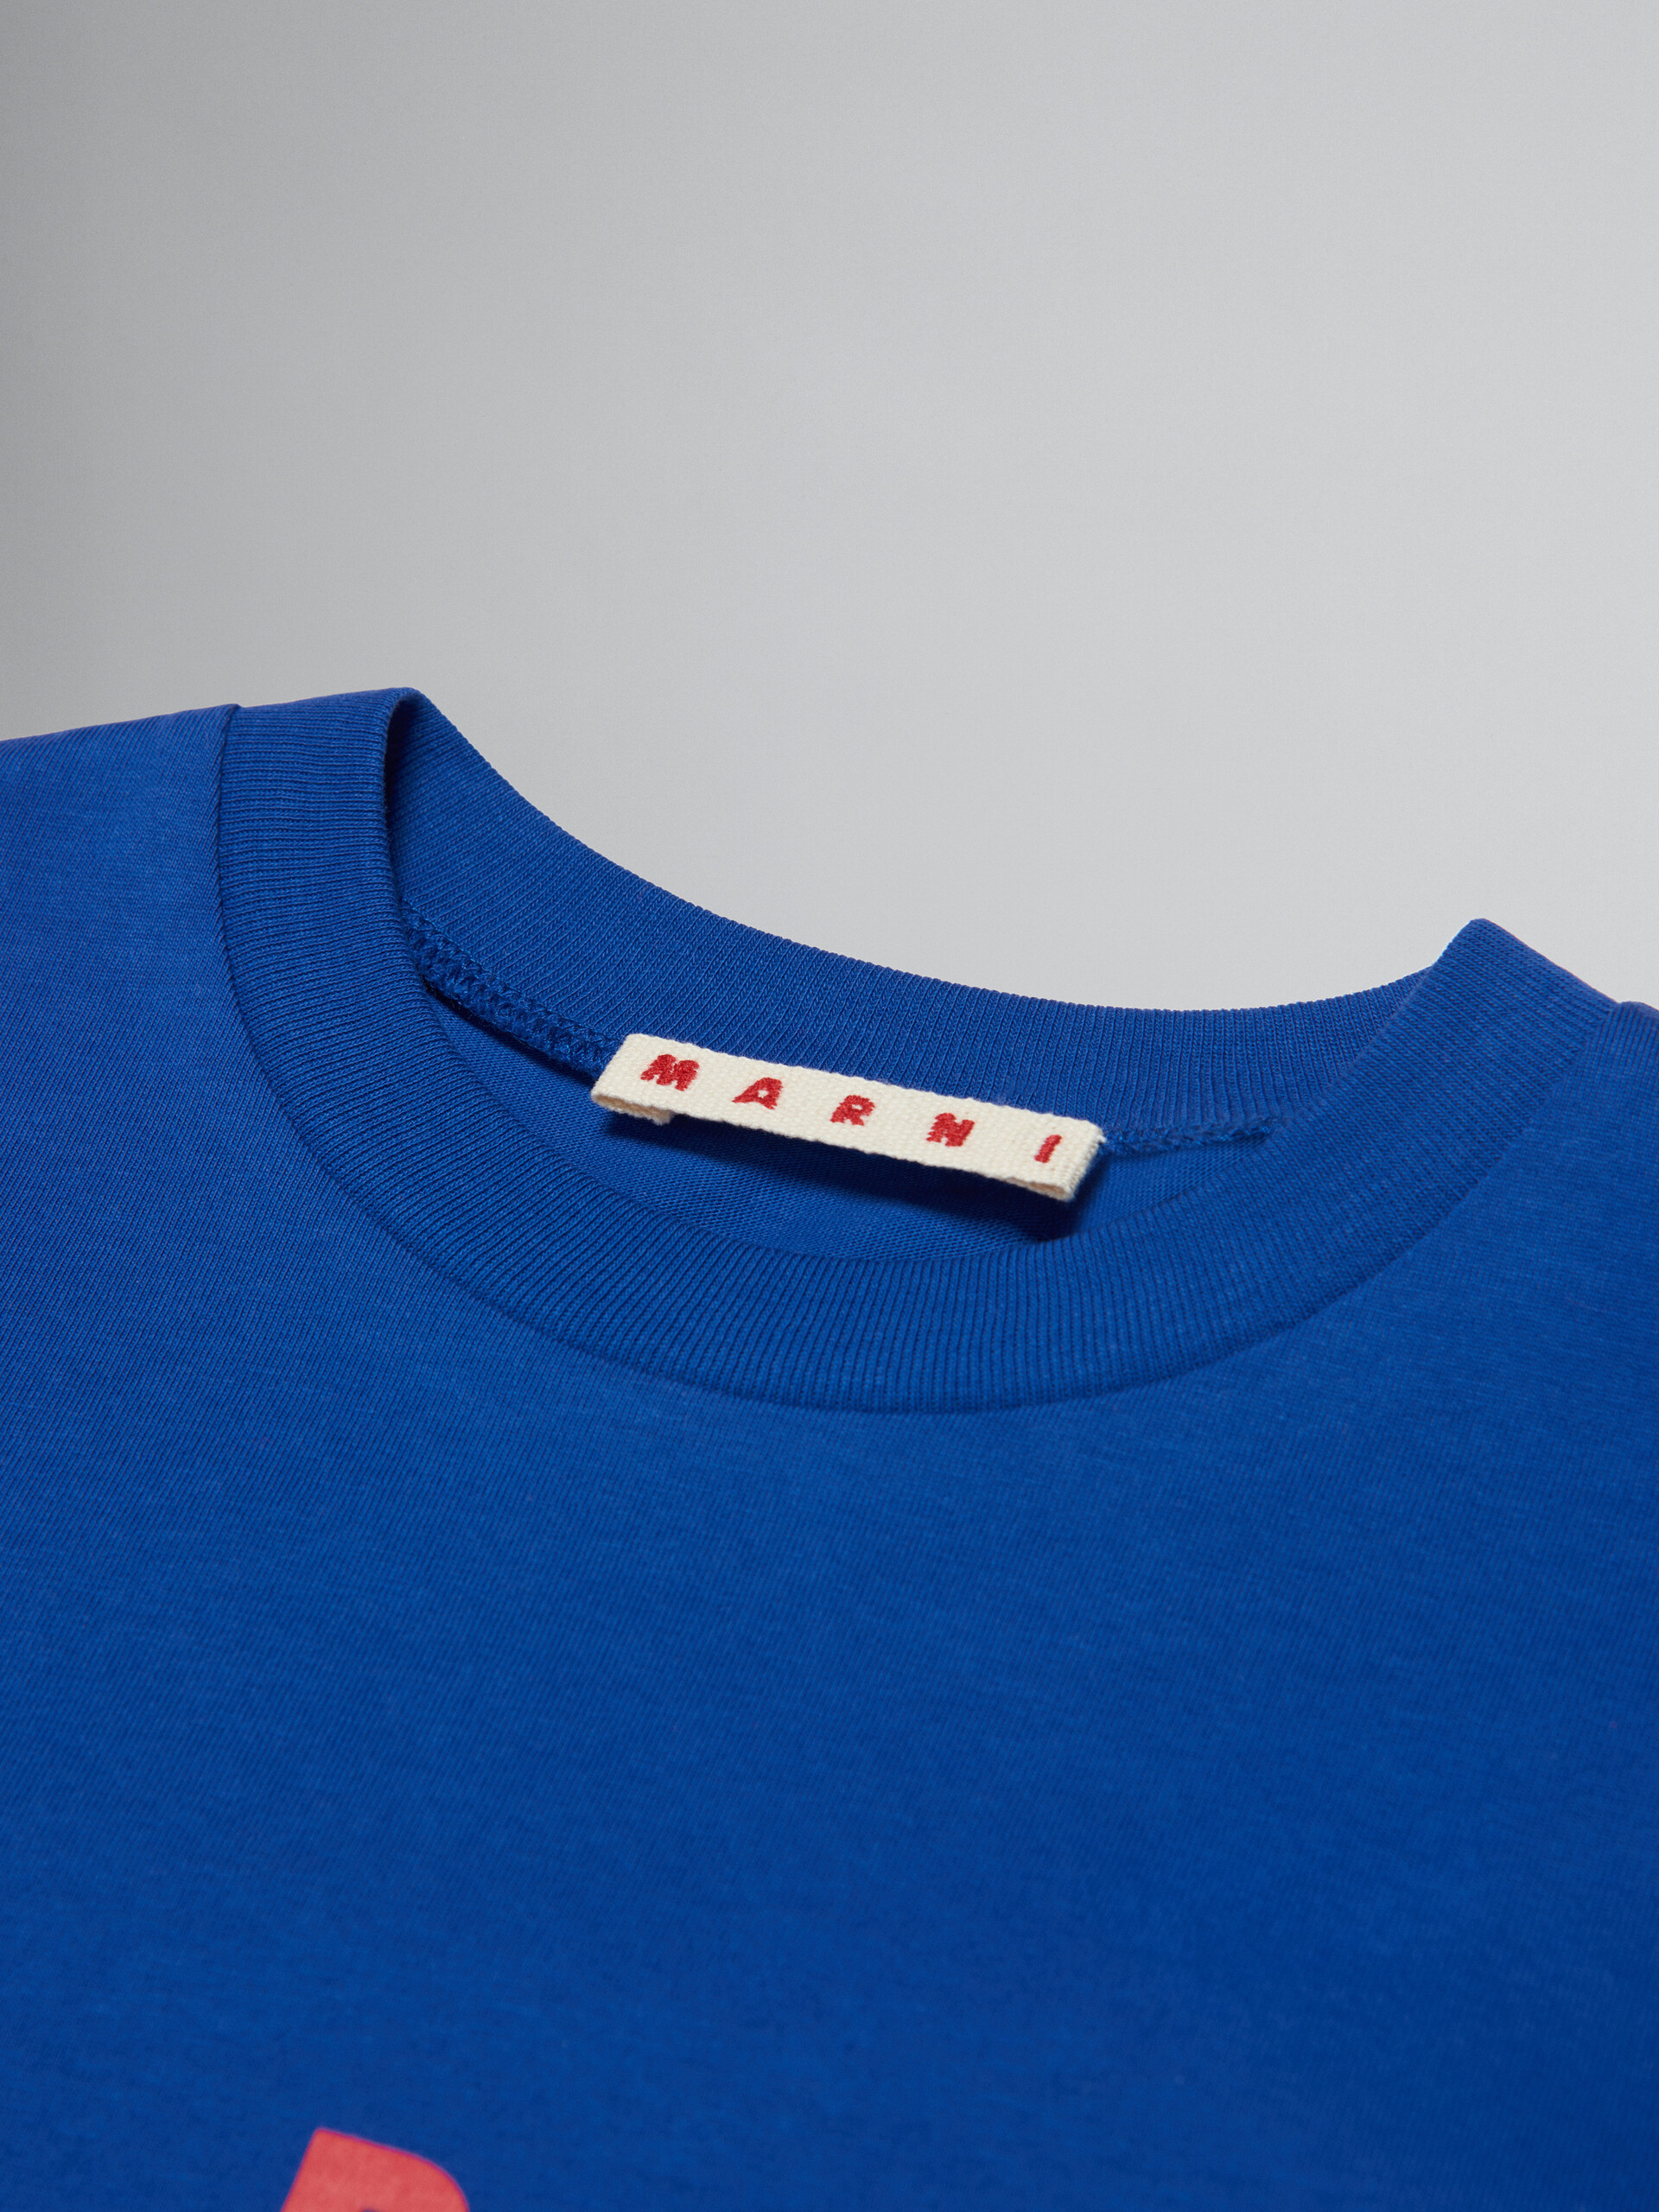 Blue jersey T-shirt with logo - T-shirts - Image 4